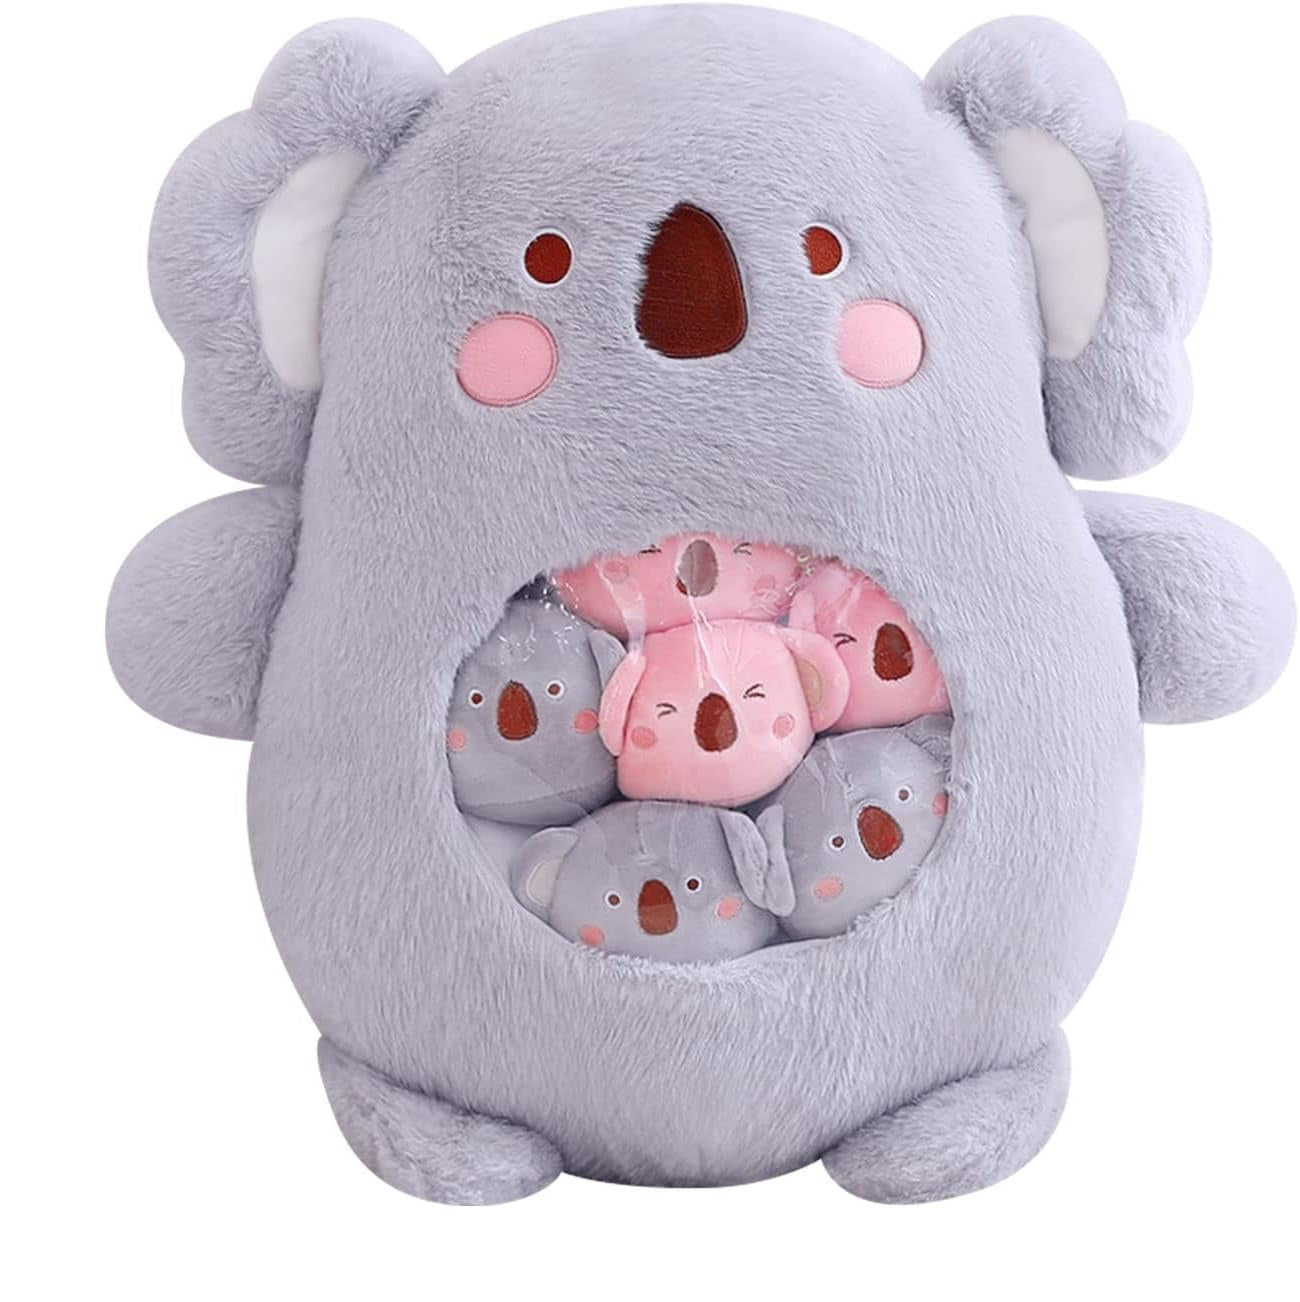 Koala bear Soft Toy